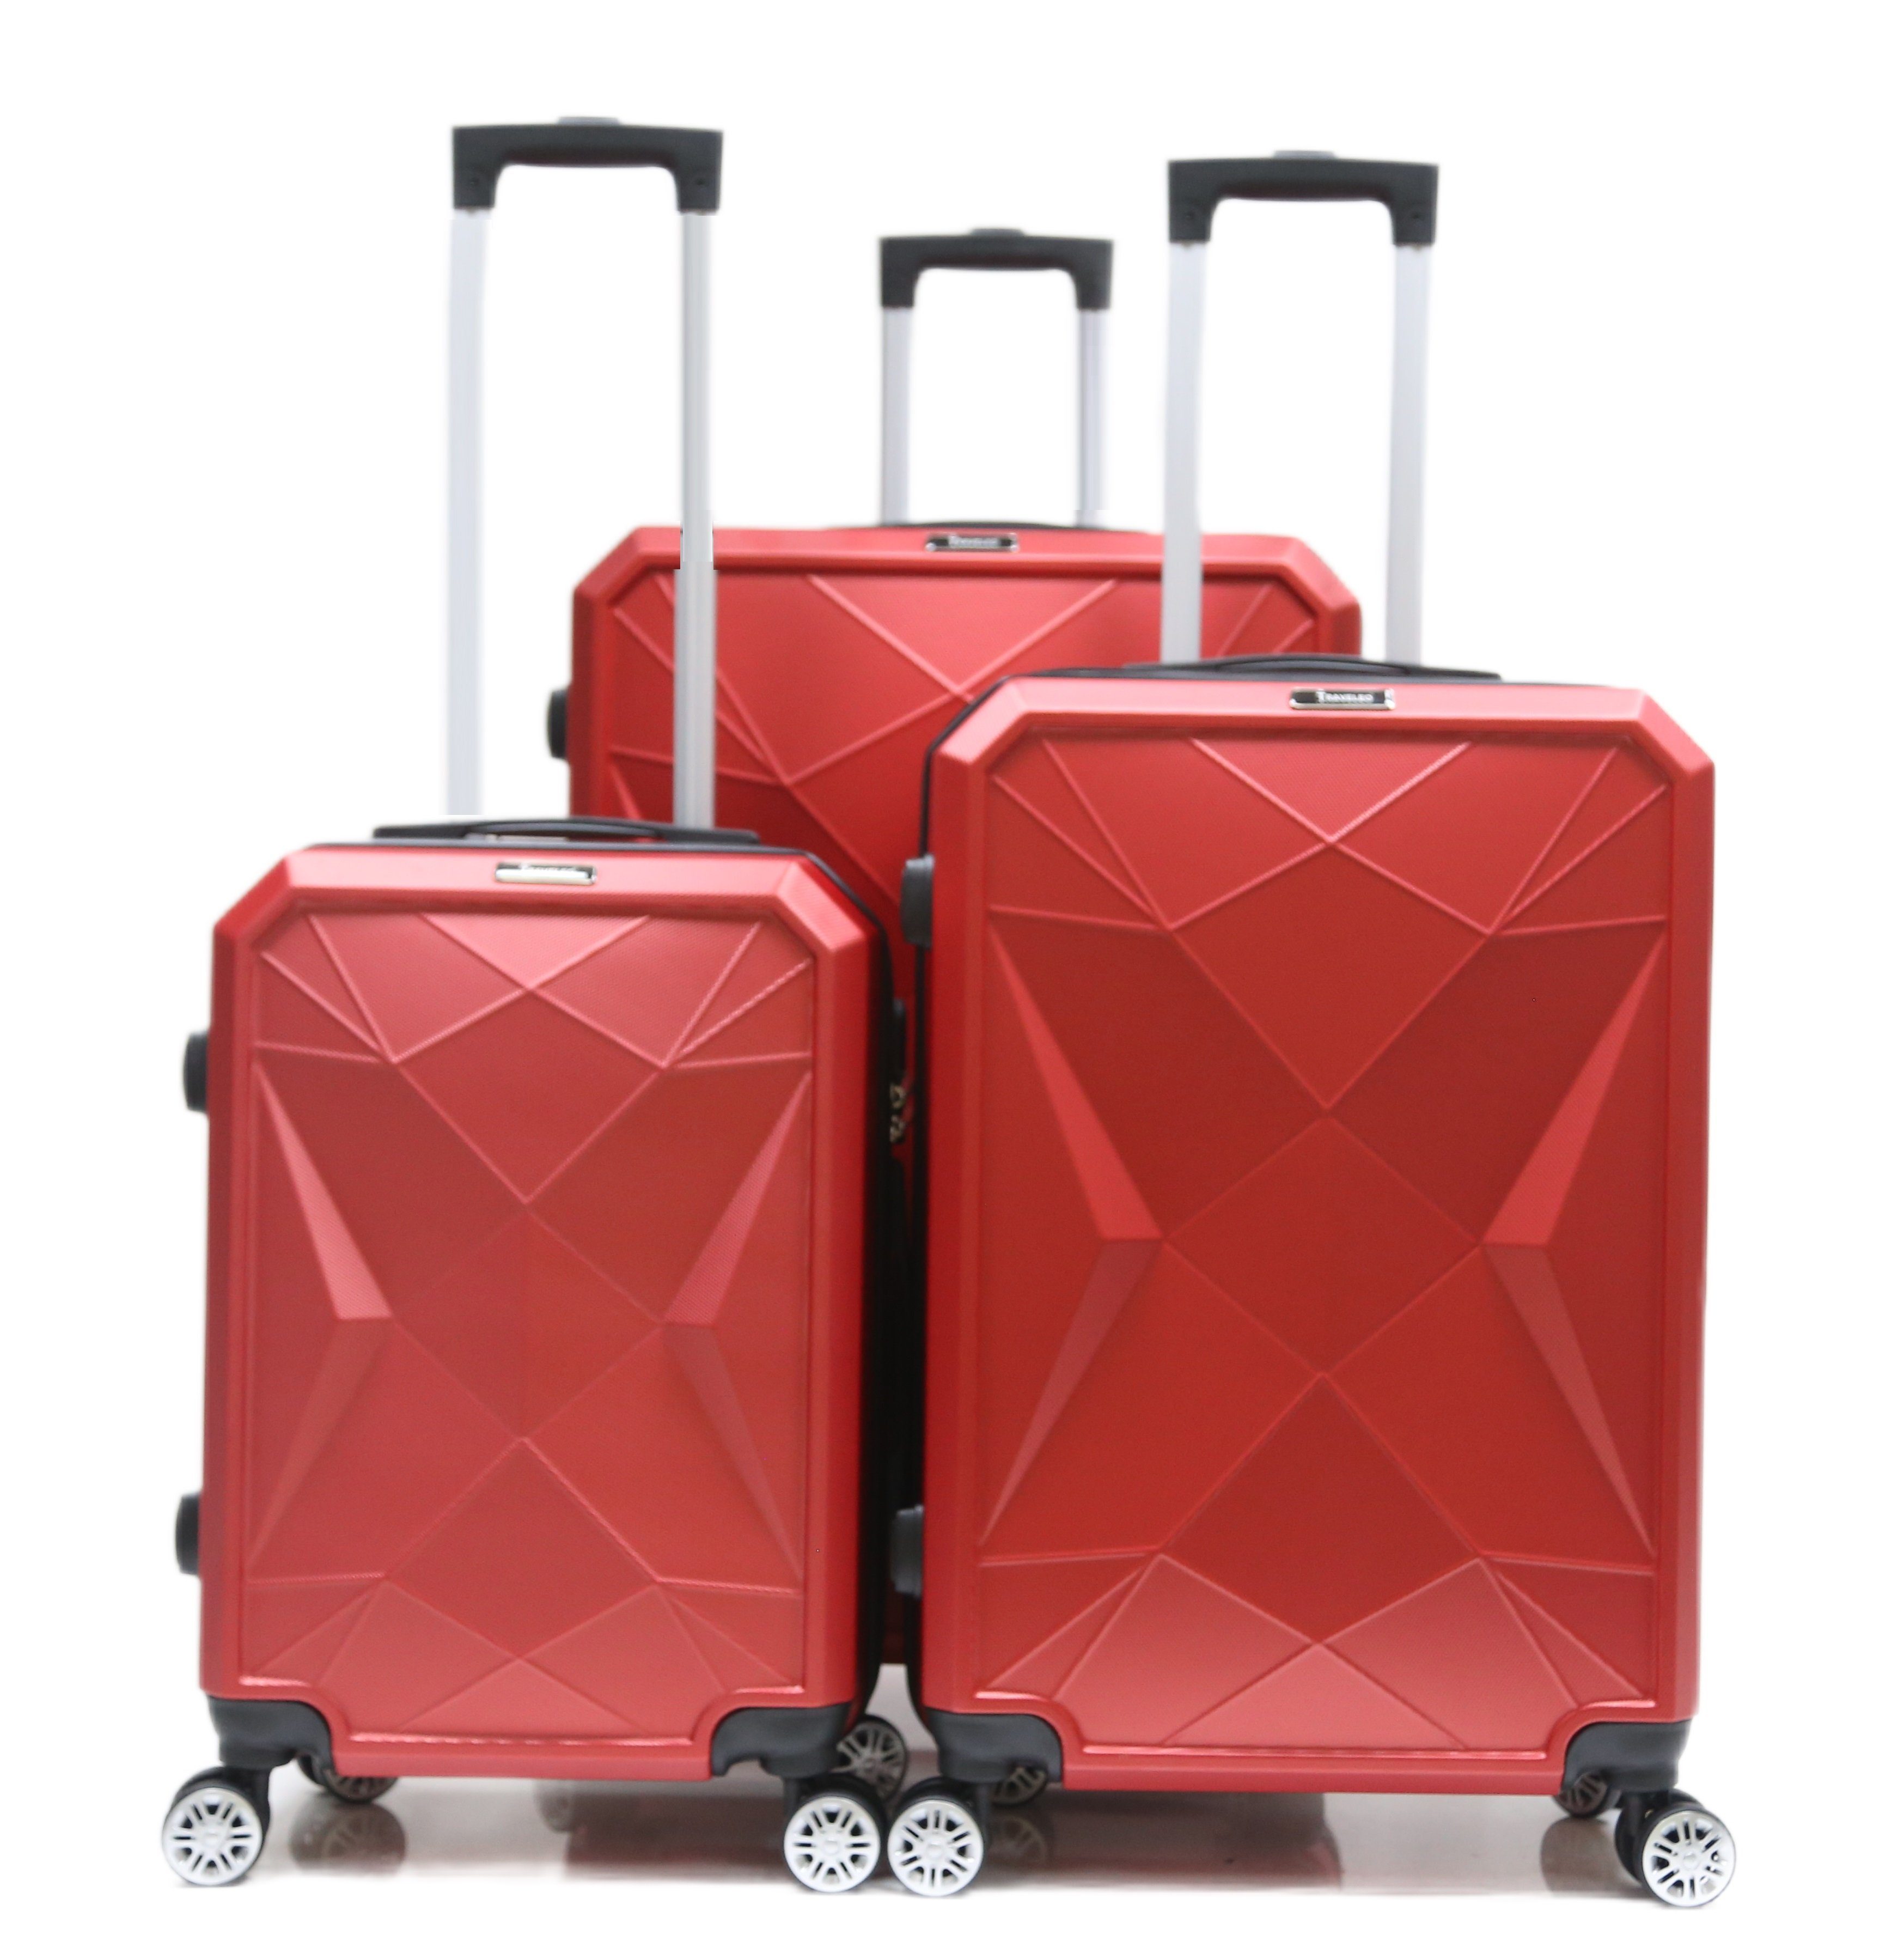 Cheffinger Kofferset 3-teilig (3 4 Set Koffer tlg) Reisekoffer Trolley Rot Kofferset, ABS-03 Rollen, Hartschale